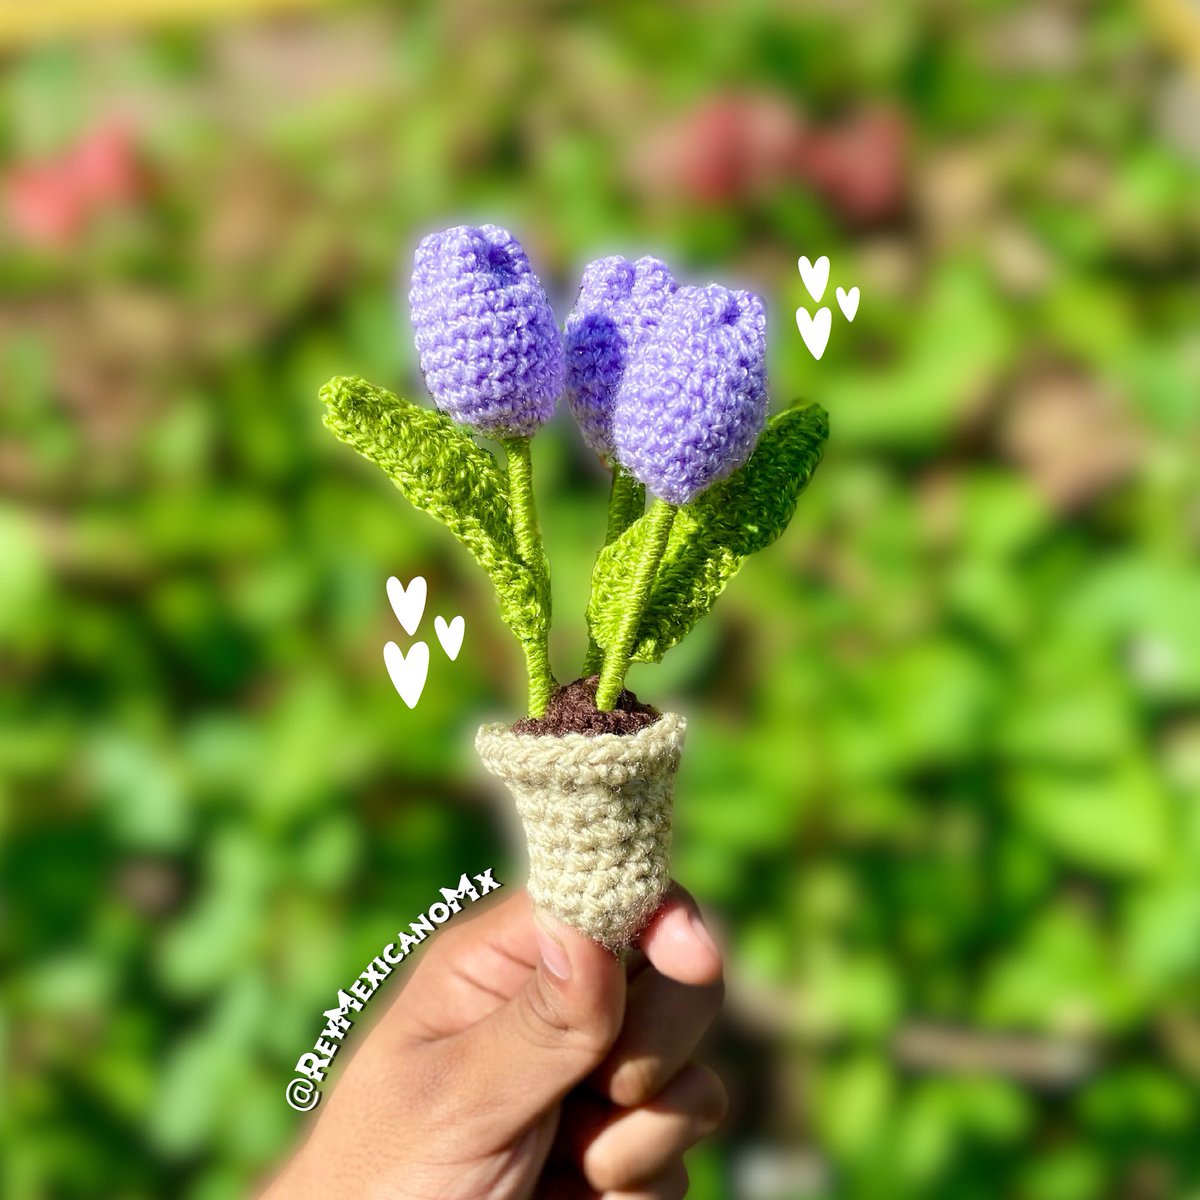 “El día que se marchiten, voy a dejar de quererte” 🤍

#ReyMexicano #CrochetFlowers #CrochetBouquet #HandmadeFlowers #CrochetArt #FloralCrafts #YarnFlowers #CrochetLove #FlowerPower #InstaCrochet #CrochetAddict #DIYFlowers #HandcraftedBouquet